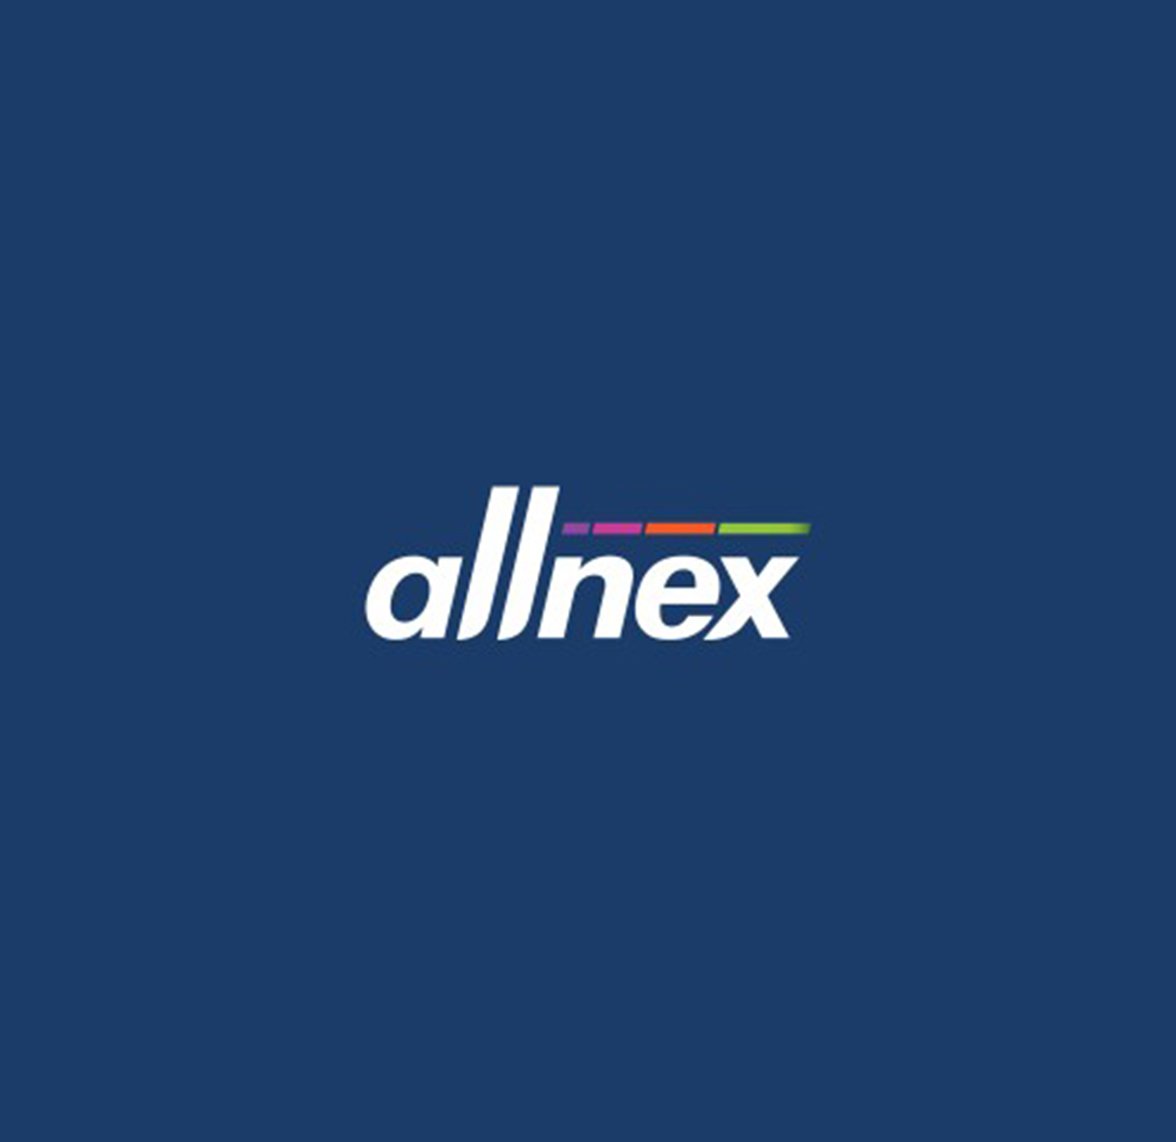 Allnex Management GmbH: Updating the presentation design